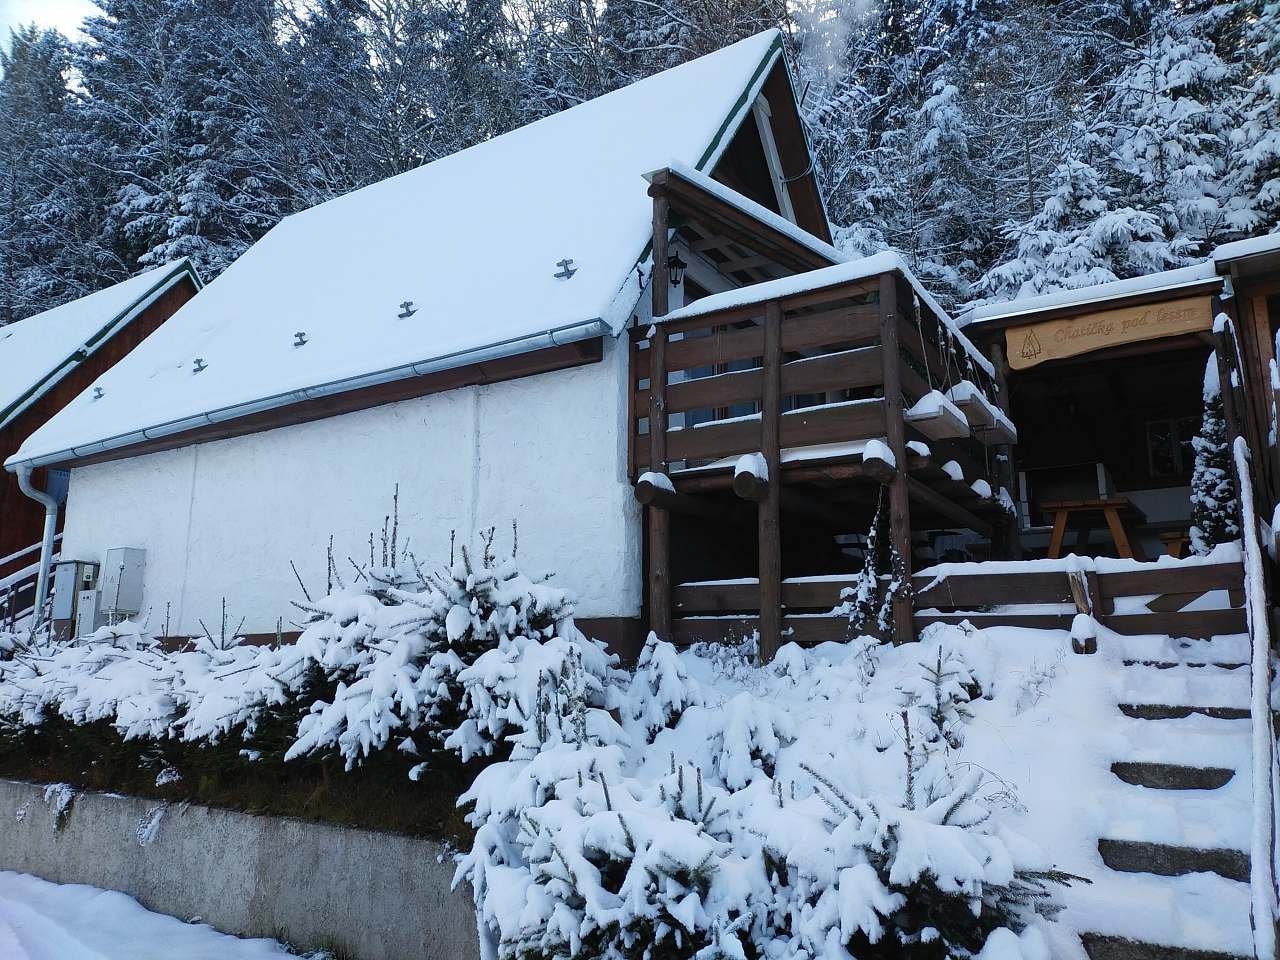 Casa de campo sob a floresta - casa de campo no inverno